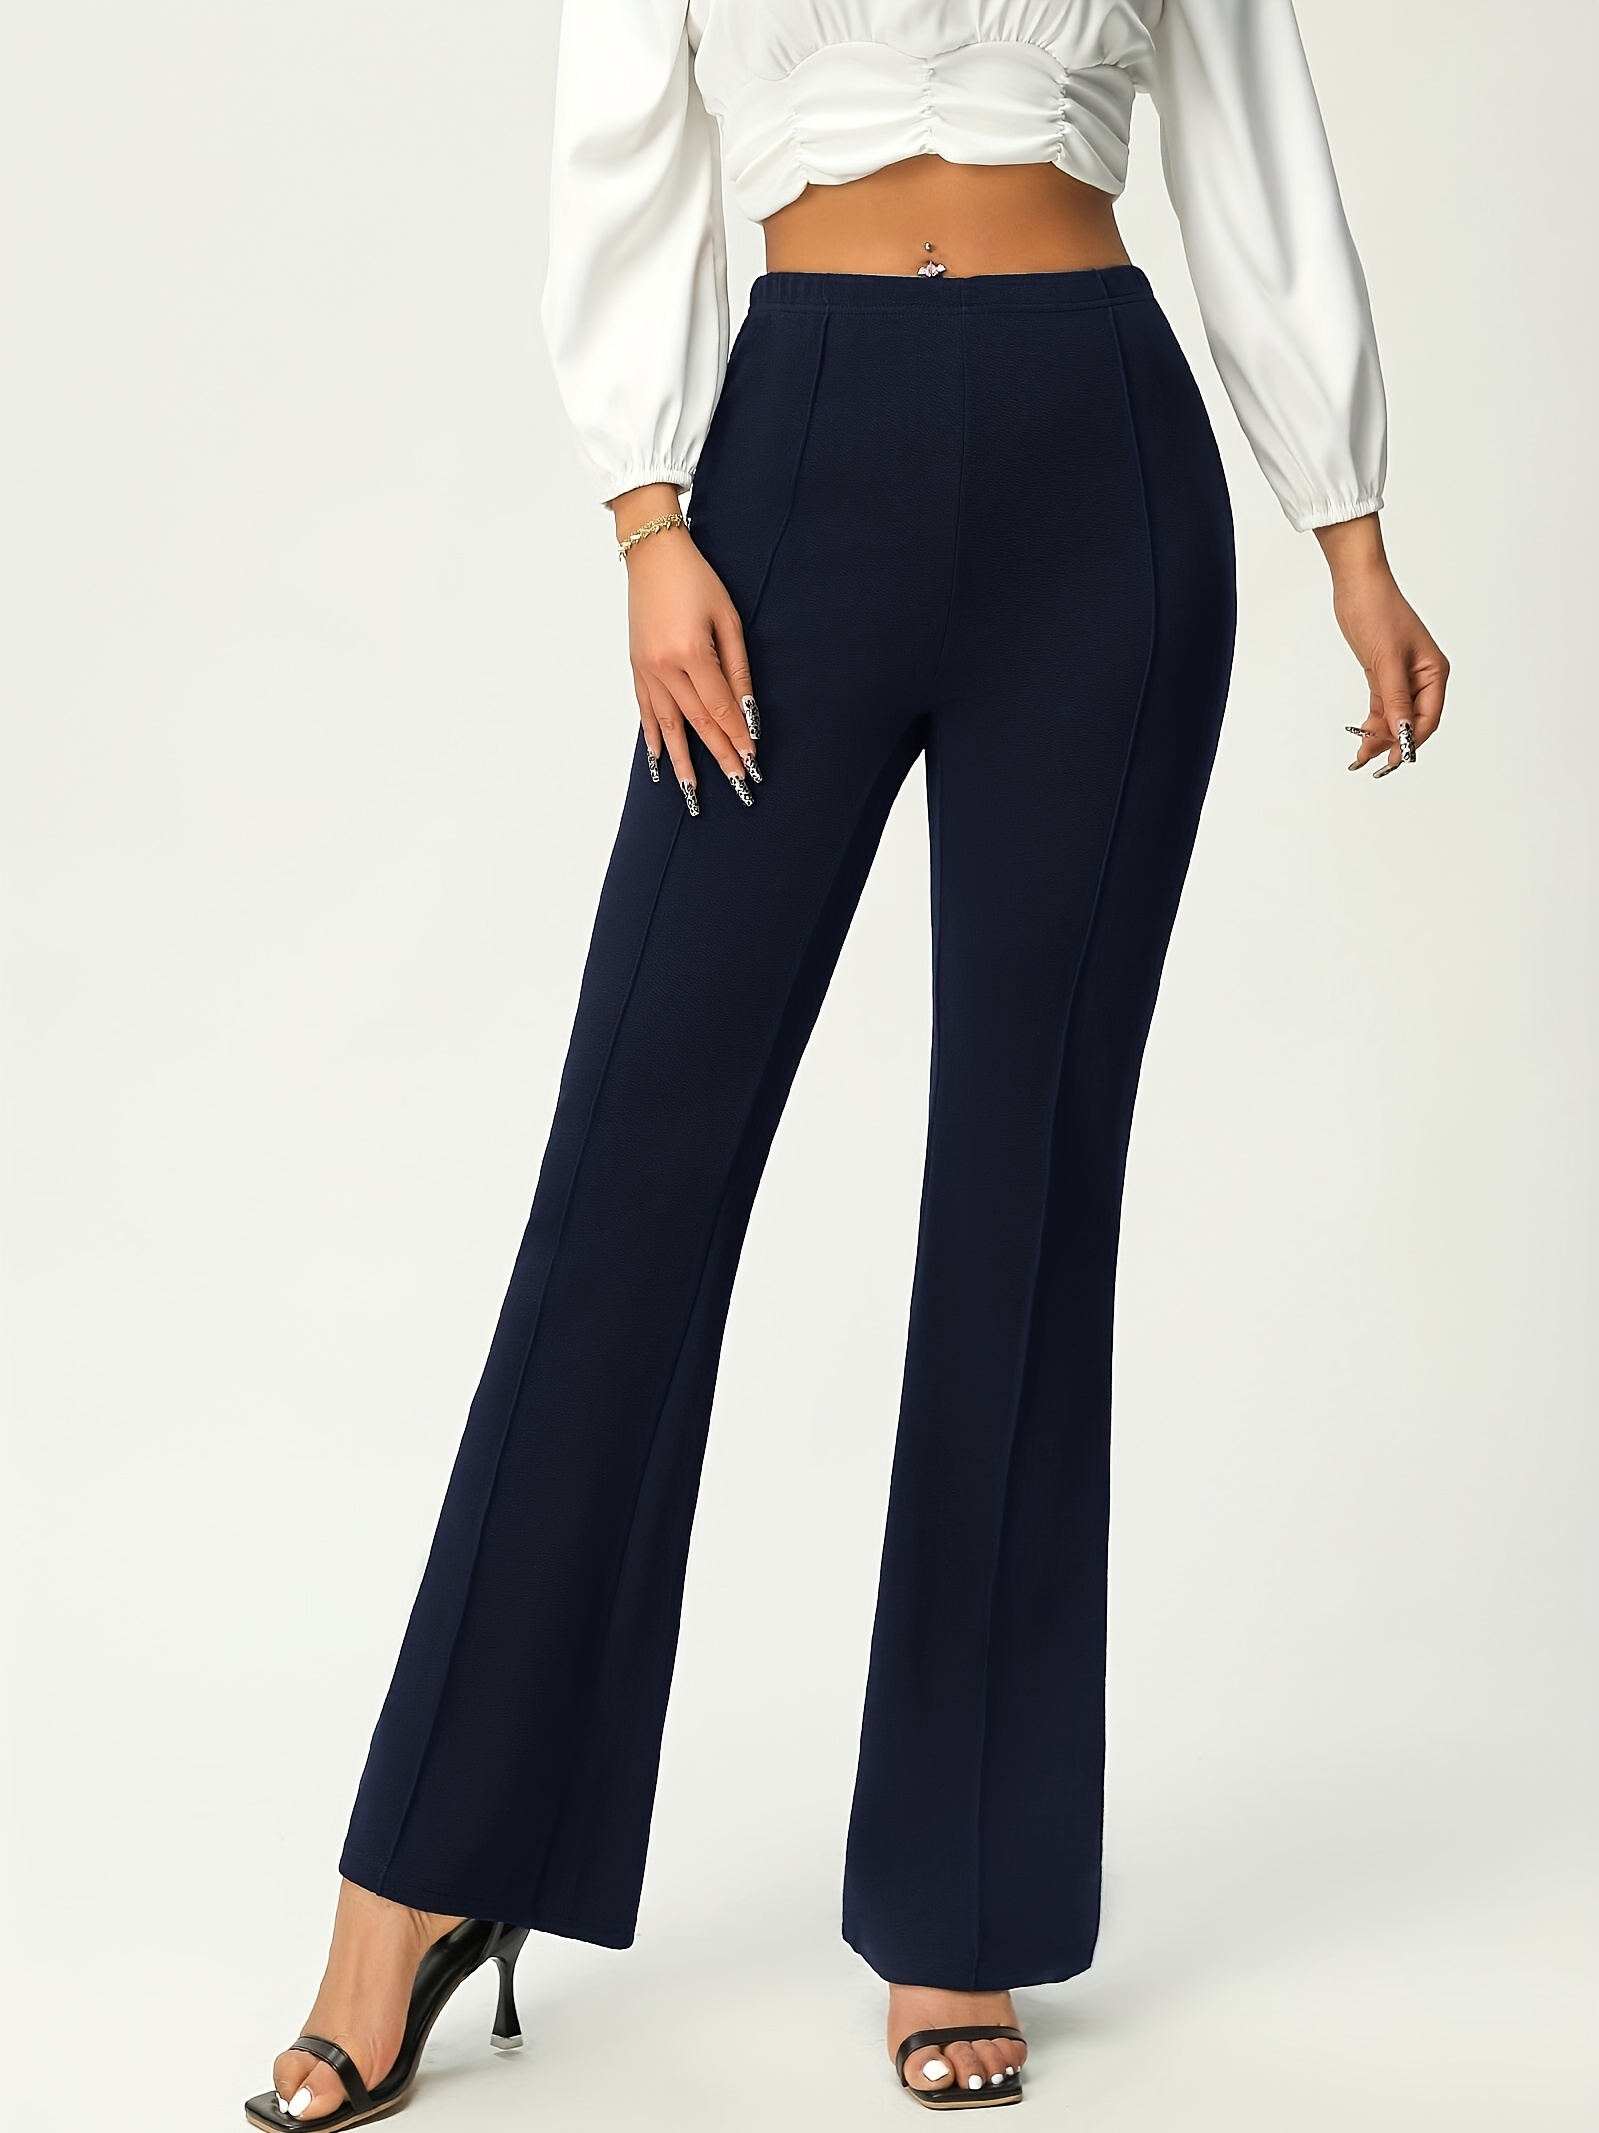 Flare Leg Solid Pants - XS / Mocha Brown  Flare leg pants, Pants for women,  High waist fashion